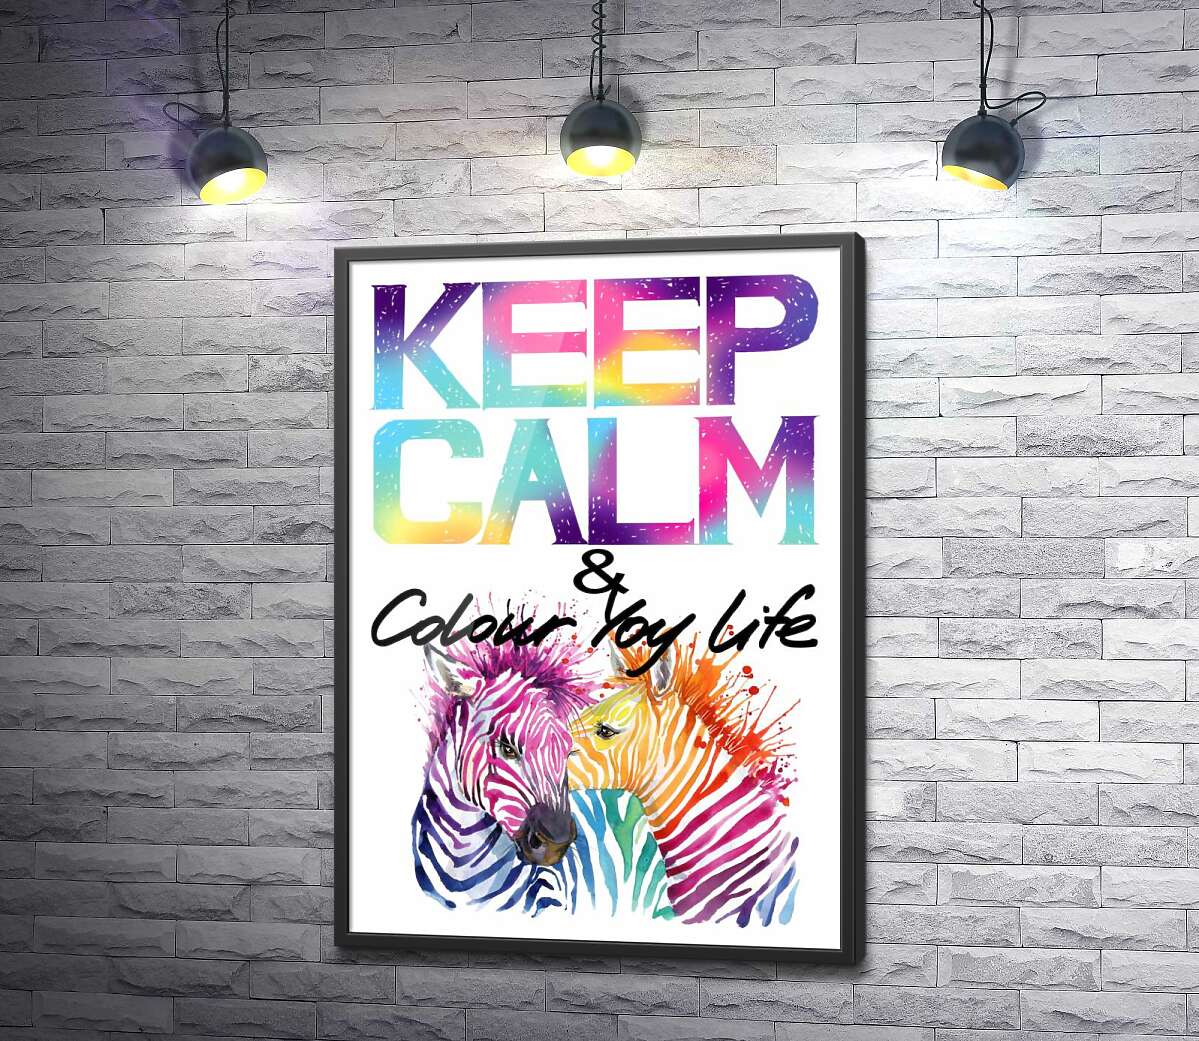 постер Яскраві зебри під написом "keep calm and colour your life"